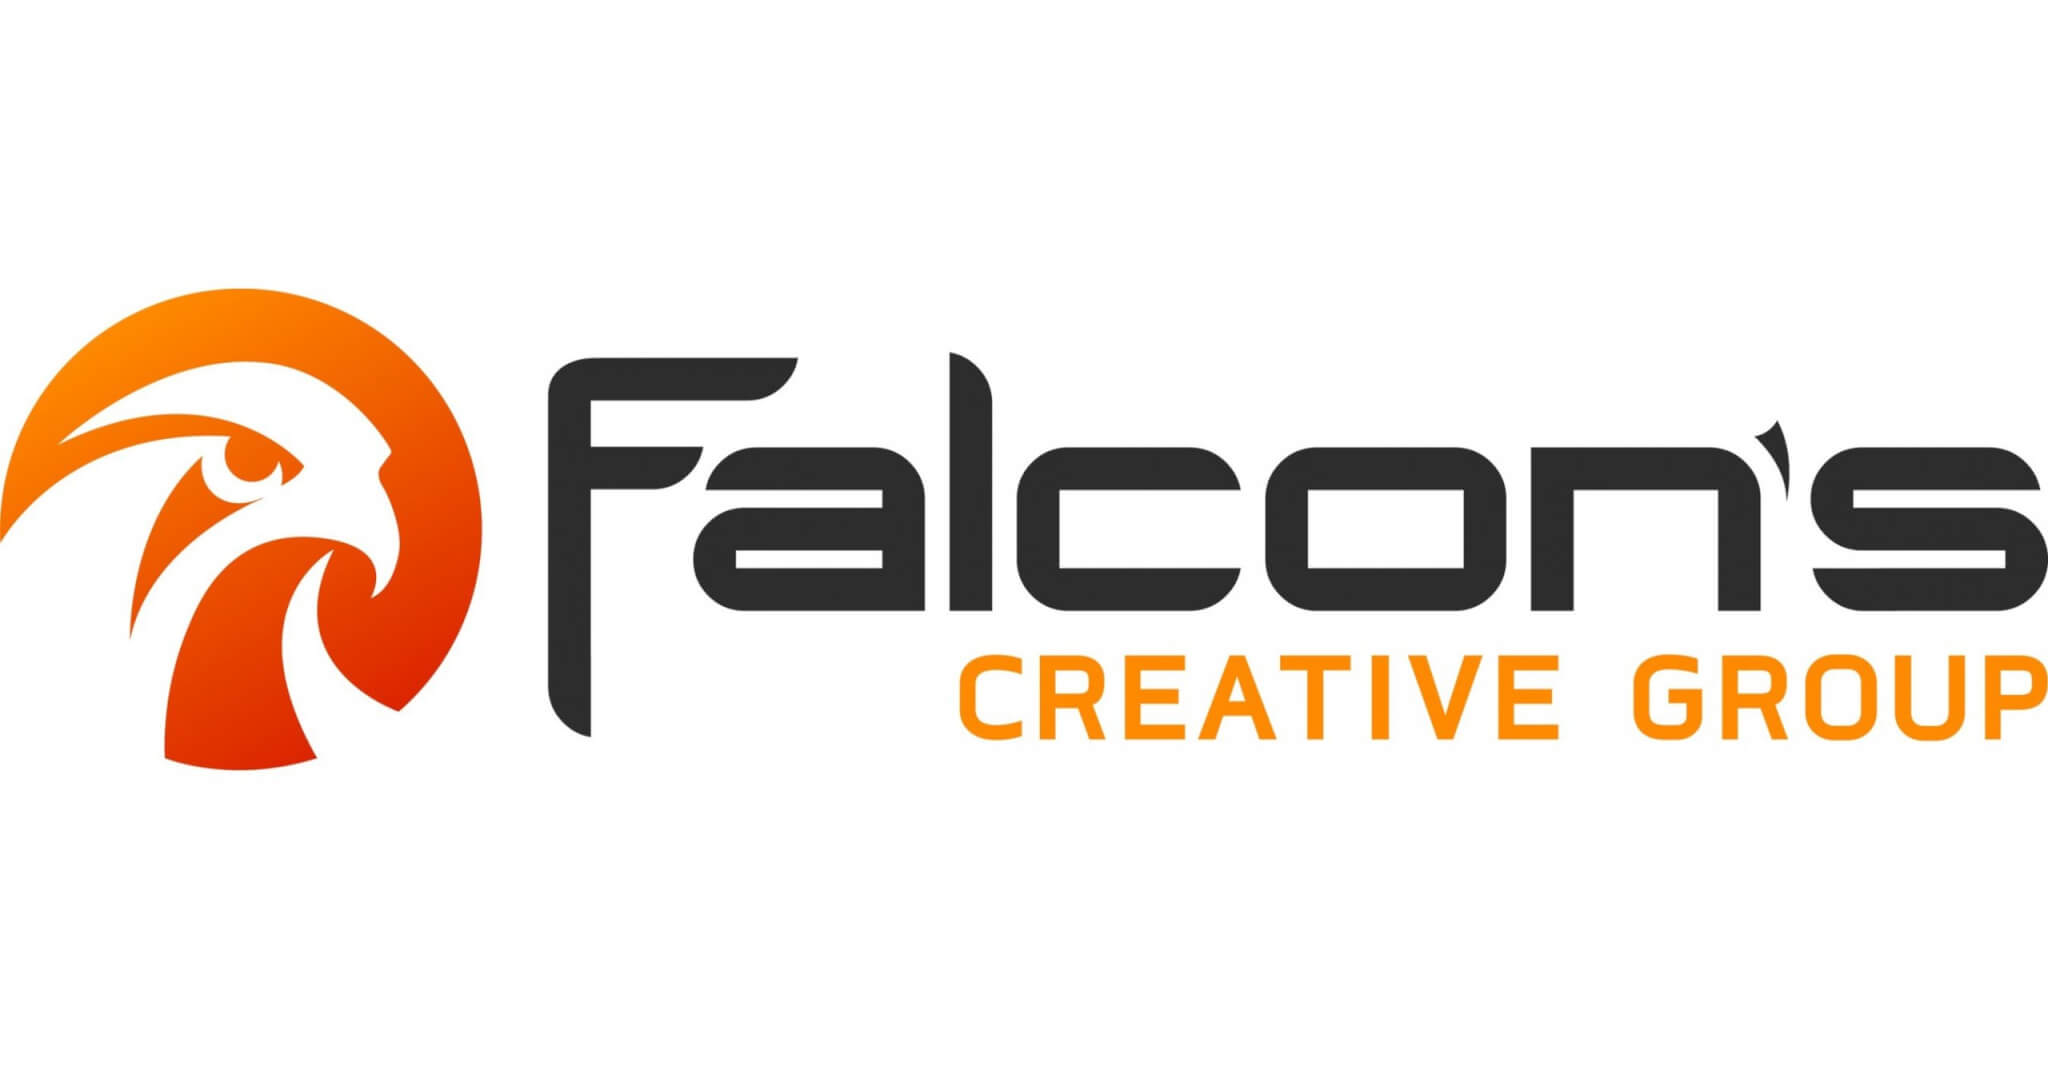 Falcon’s Creative Group selects Vicon